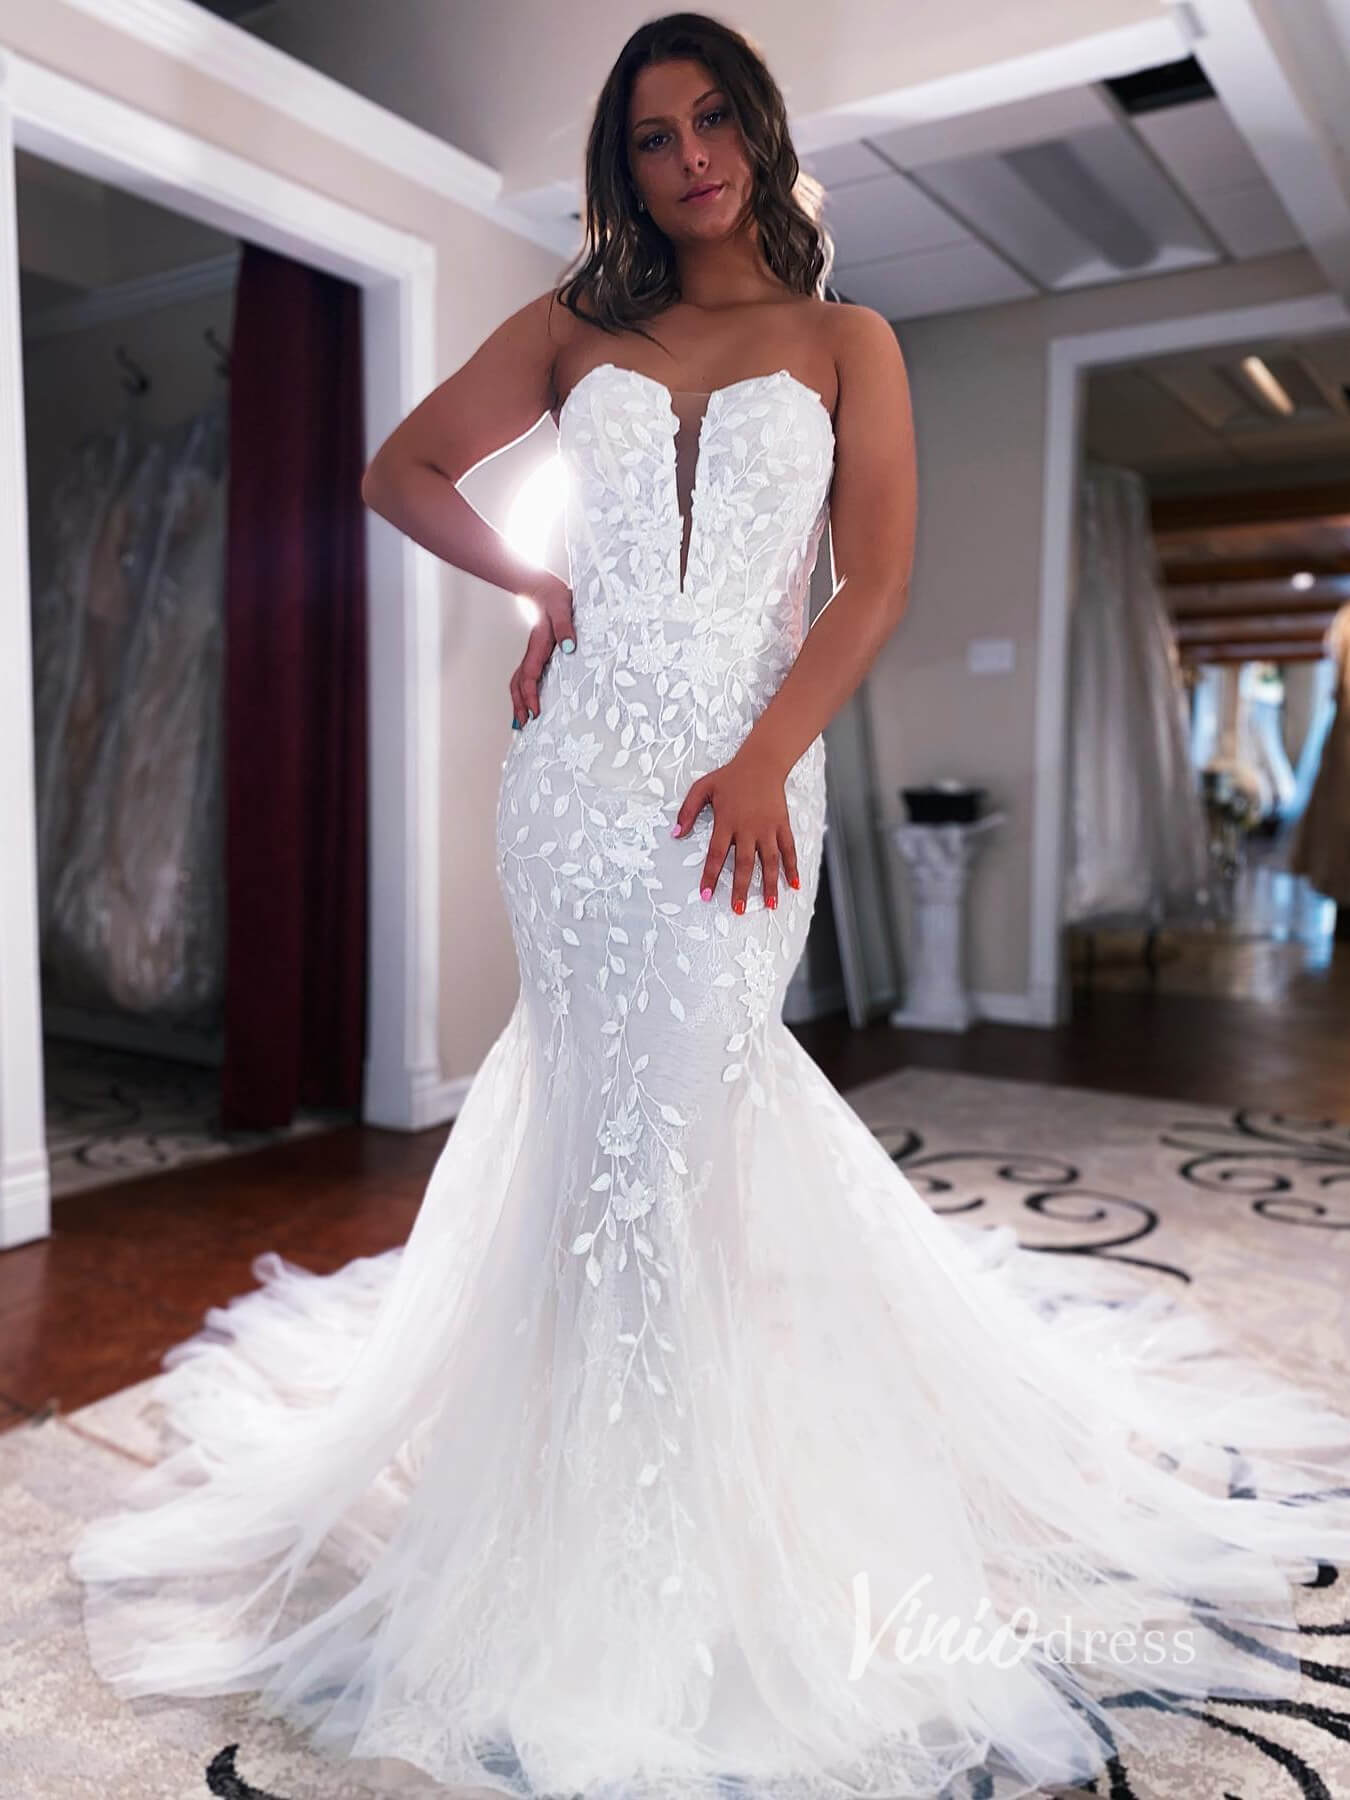 Strapless Lace Mermaid Wedding Dress with Detachable Overskirt VW2150-wedding dresses-Viniodress-Viniodress